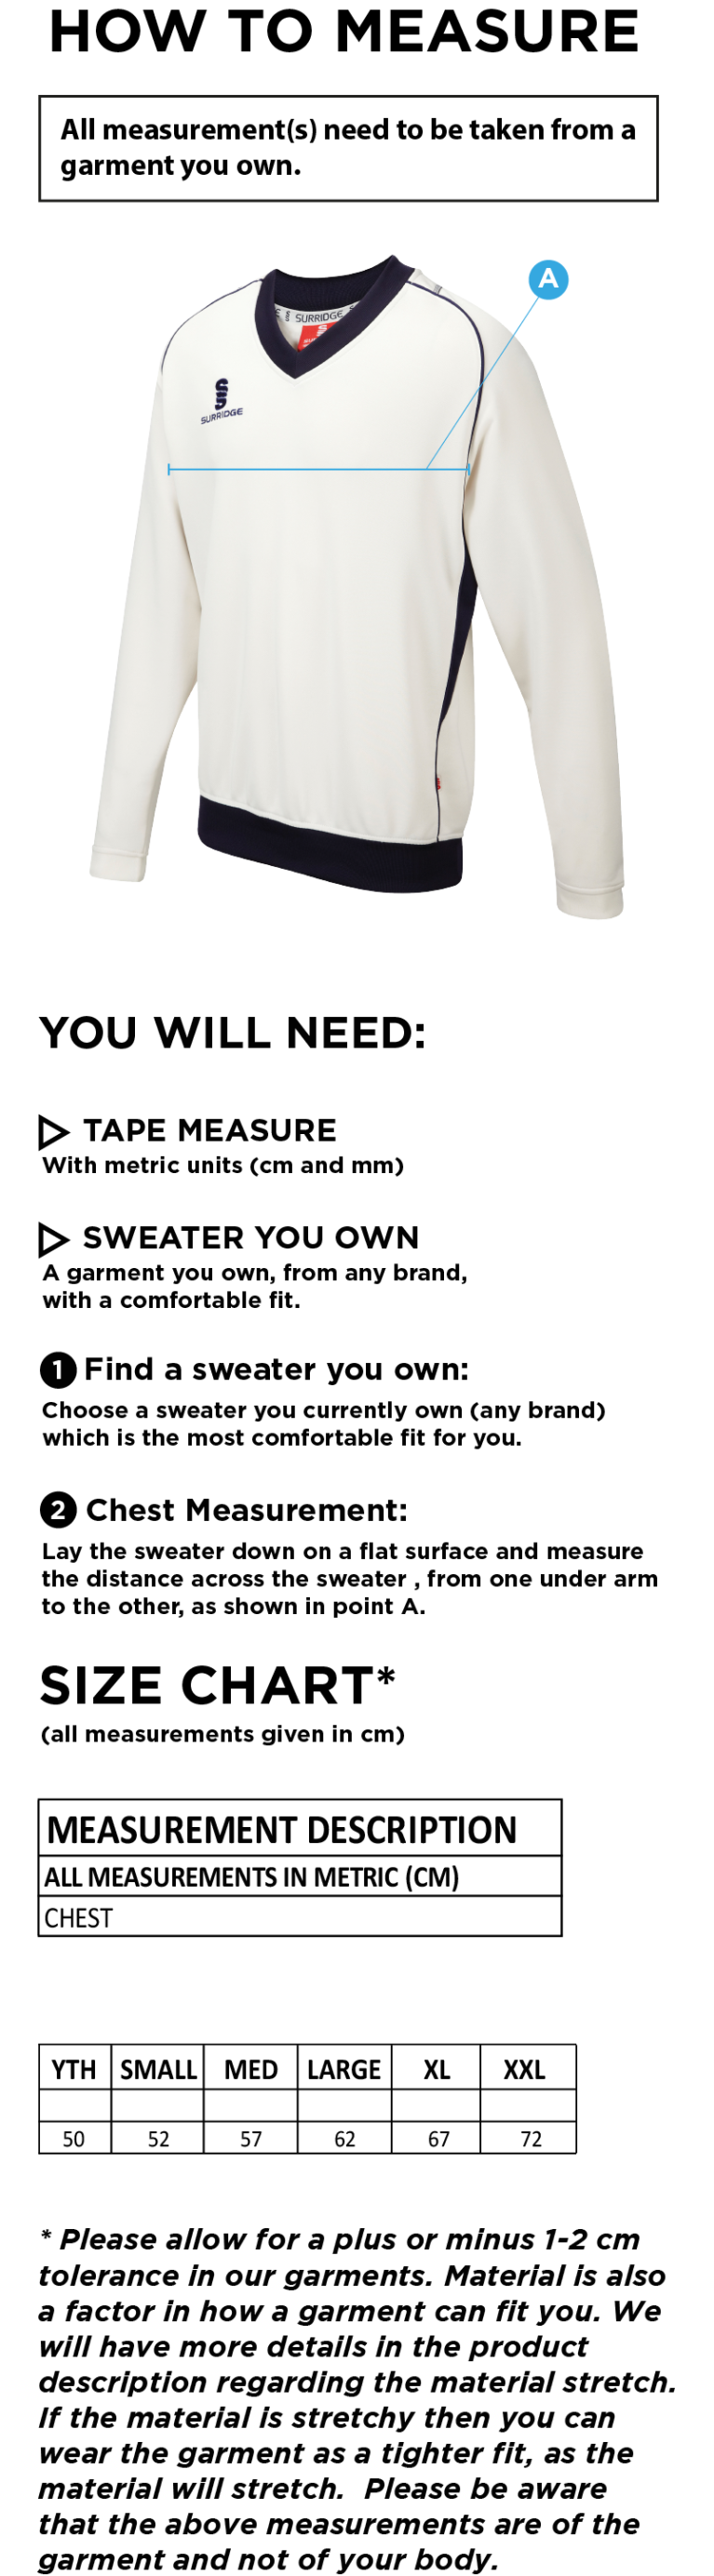 Cleckheaton CC - Ergo Long Sleeve Sweater - Size Guide